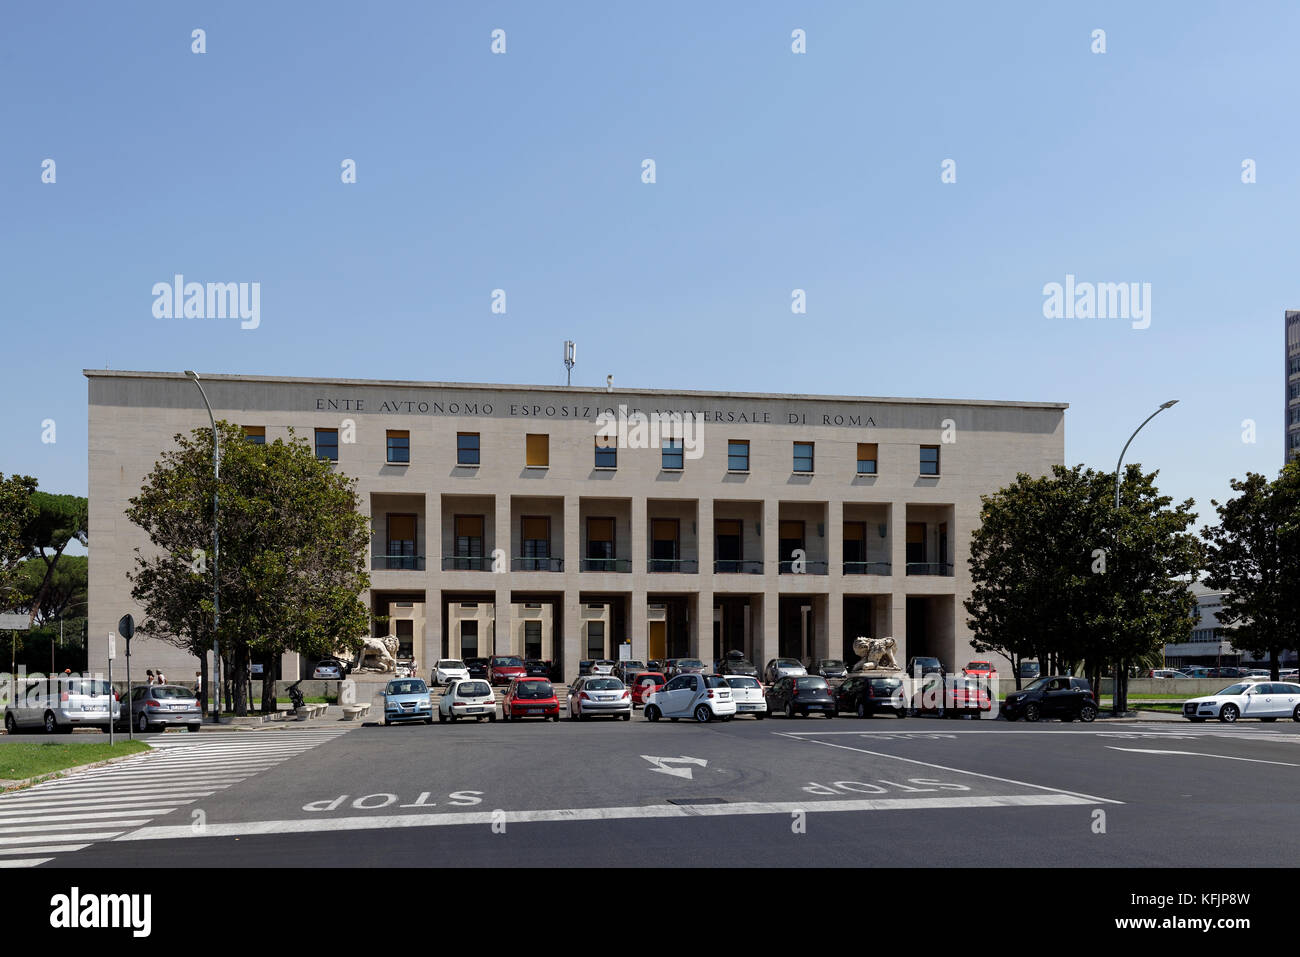 Die Fassade des Palazzo Uffici Gebäude bezeichnet mit Ente Autonomo Esposizione Universale di Roma. Eur. Rom. Italien. Stockfoto